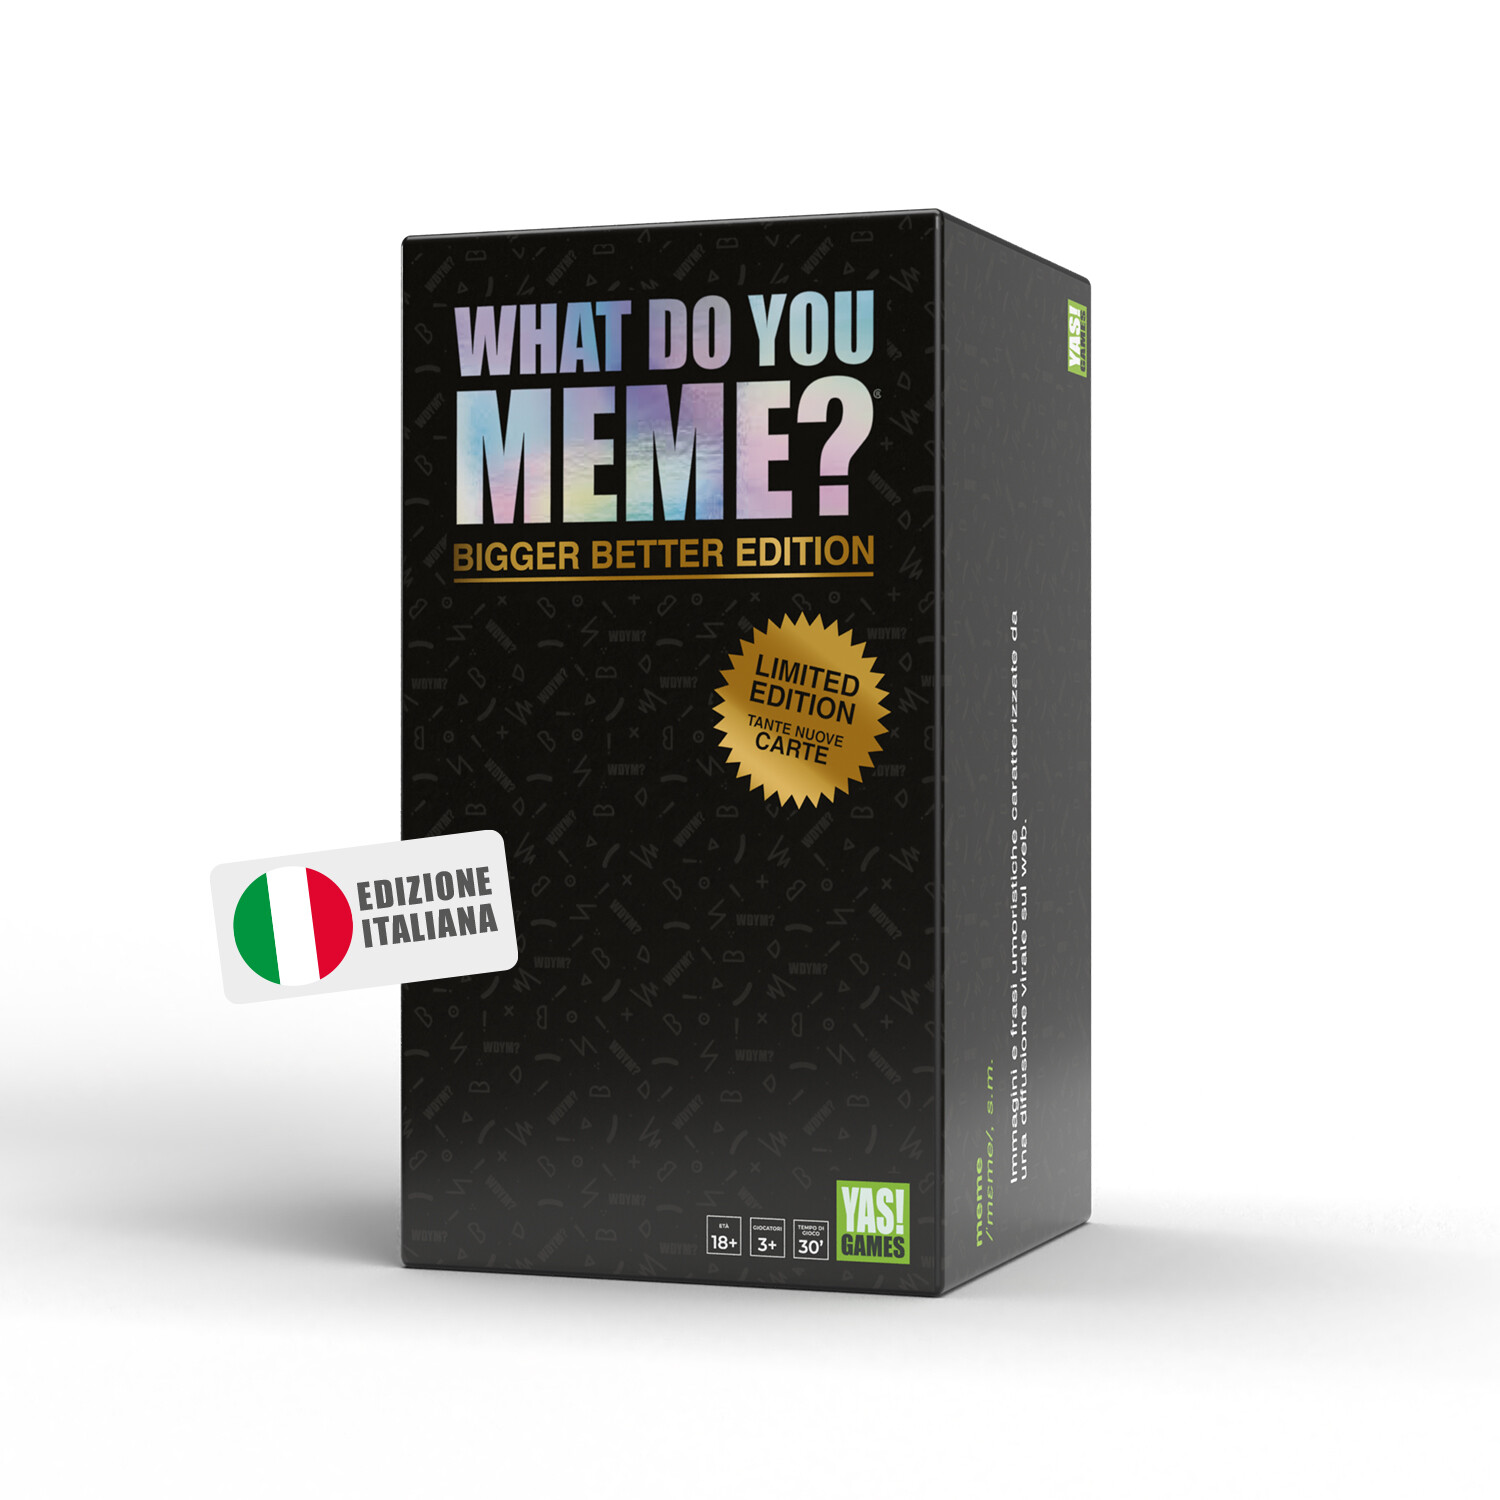 Yas!games - what do you meme? bigger better edition -  piu' meme piu' risate - -- No Brand --